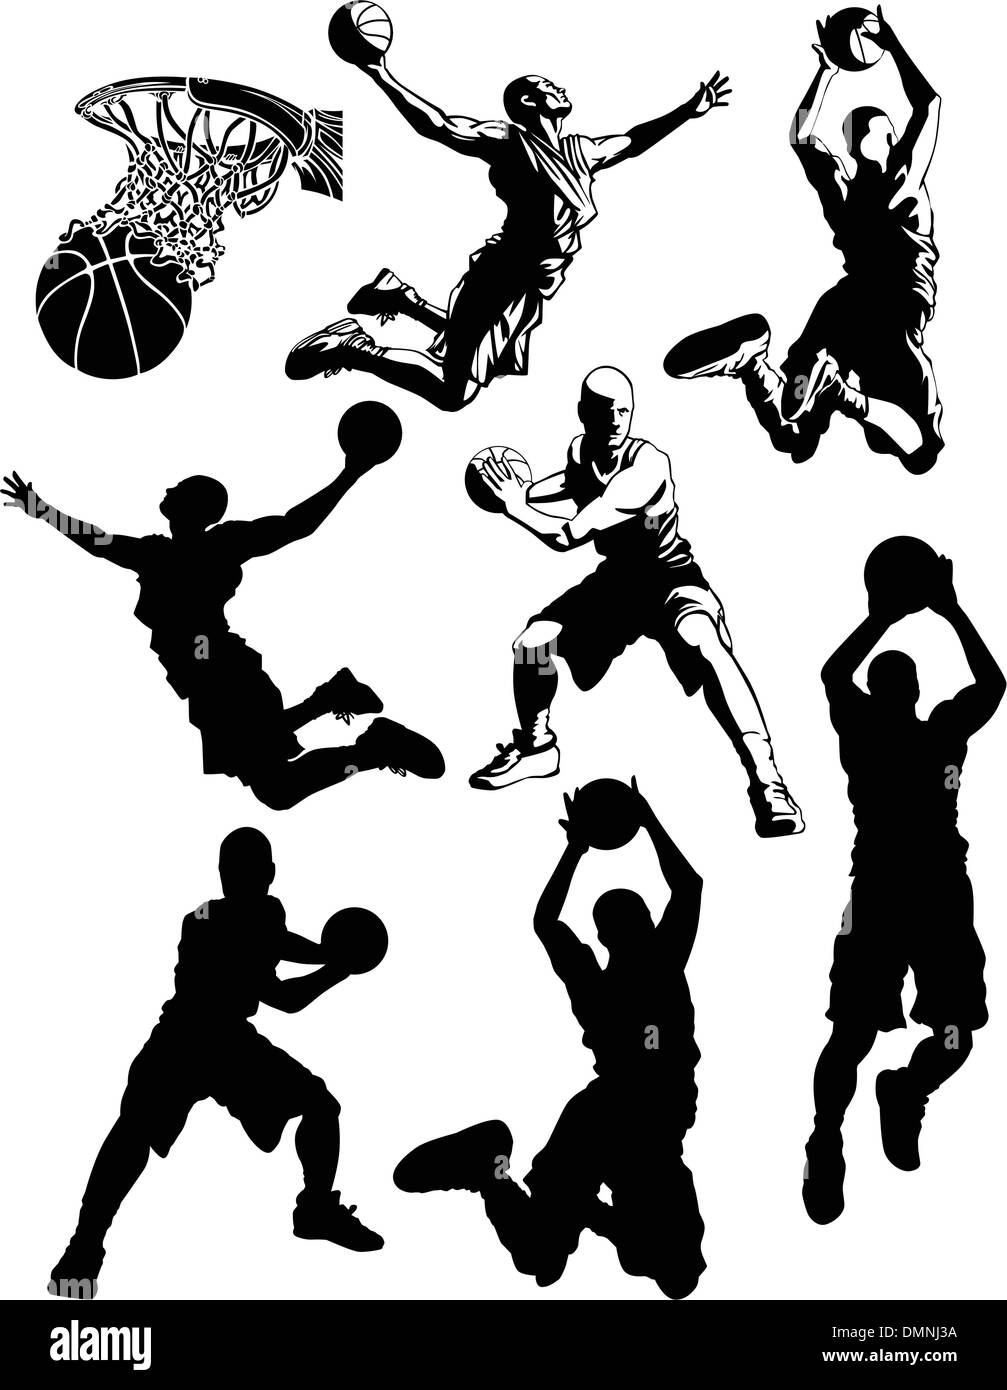 Basketball-Silhouetten der Männer Stock Vektor